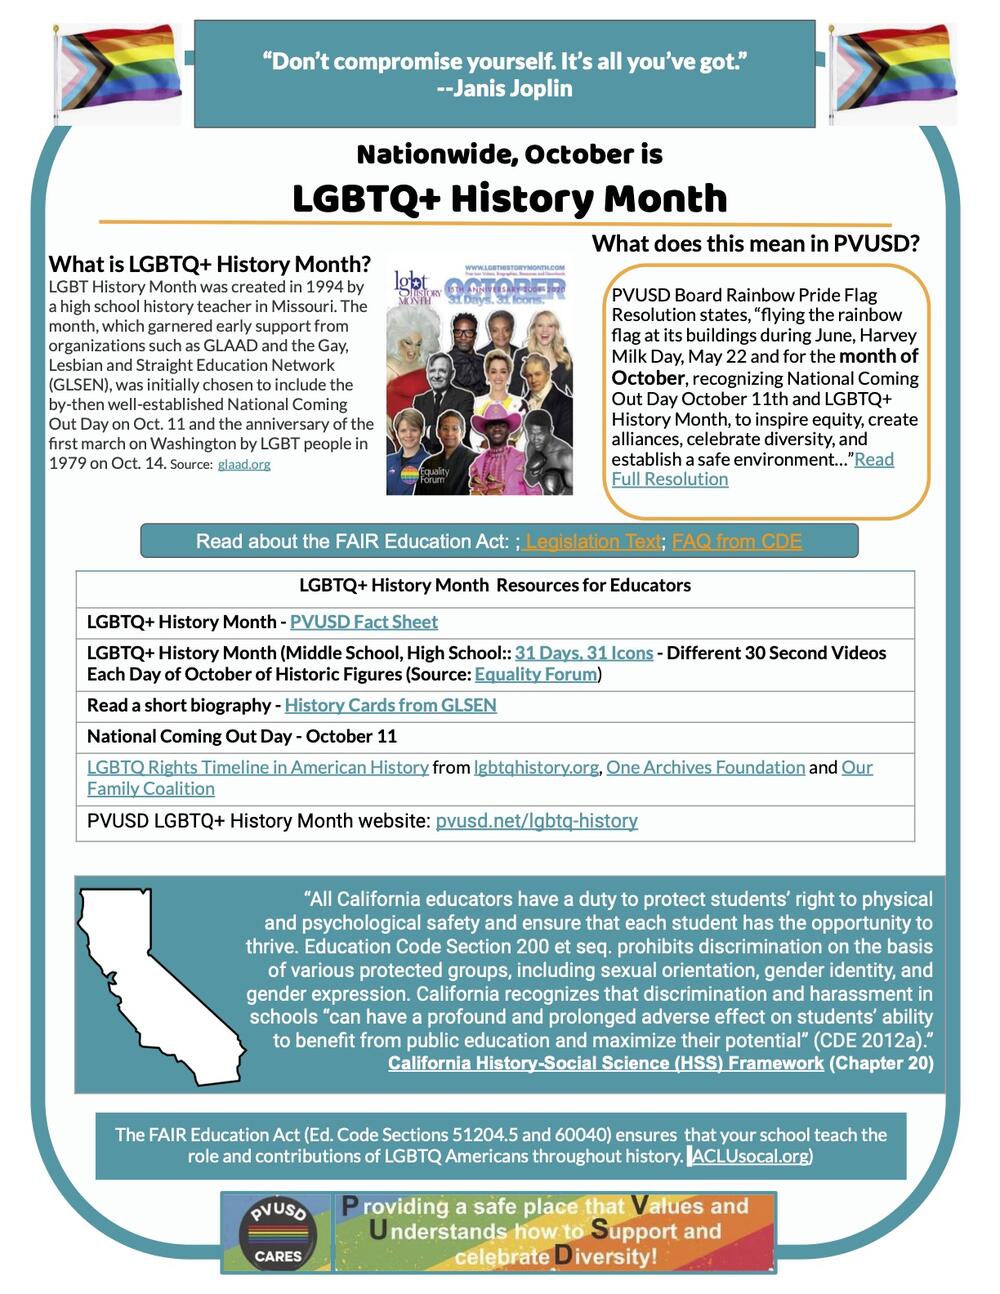 PVUSD LGBTQ+ History Month handout